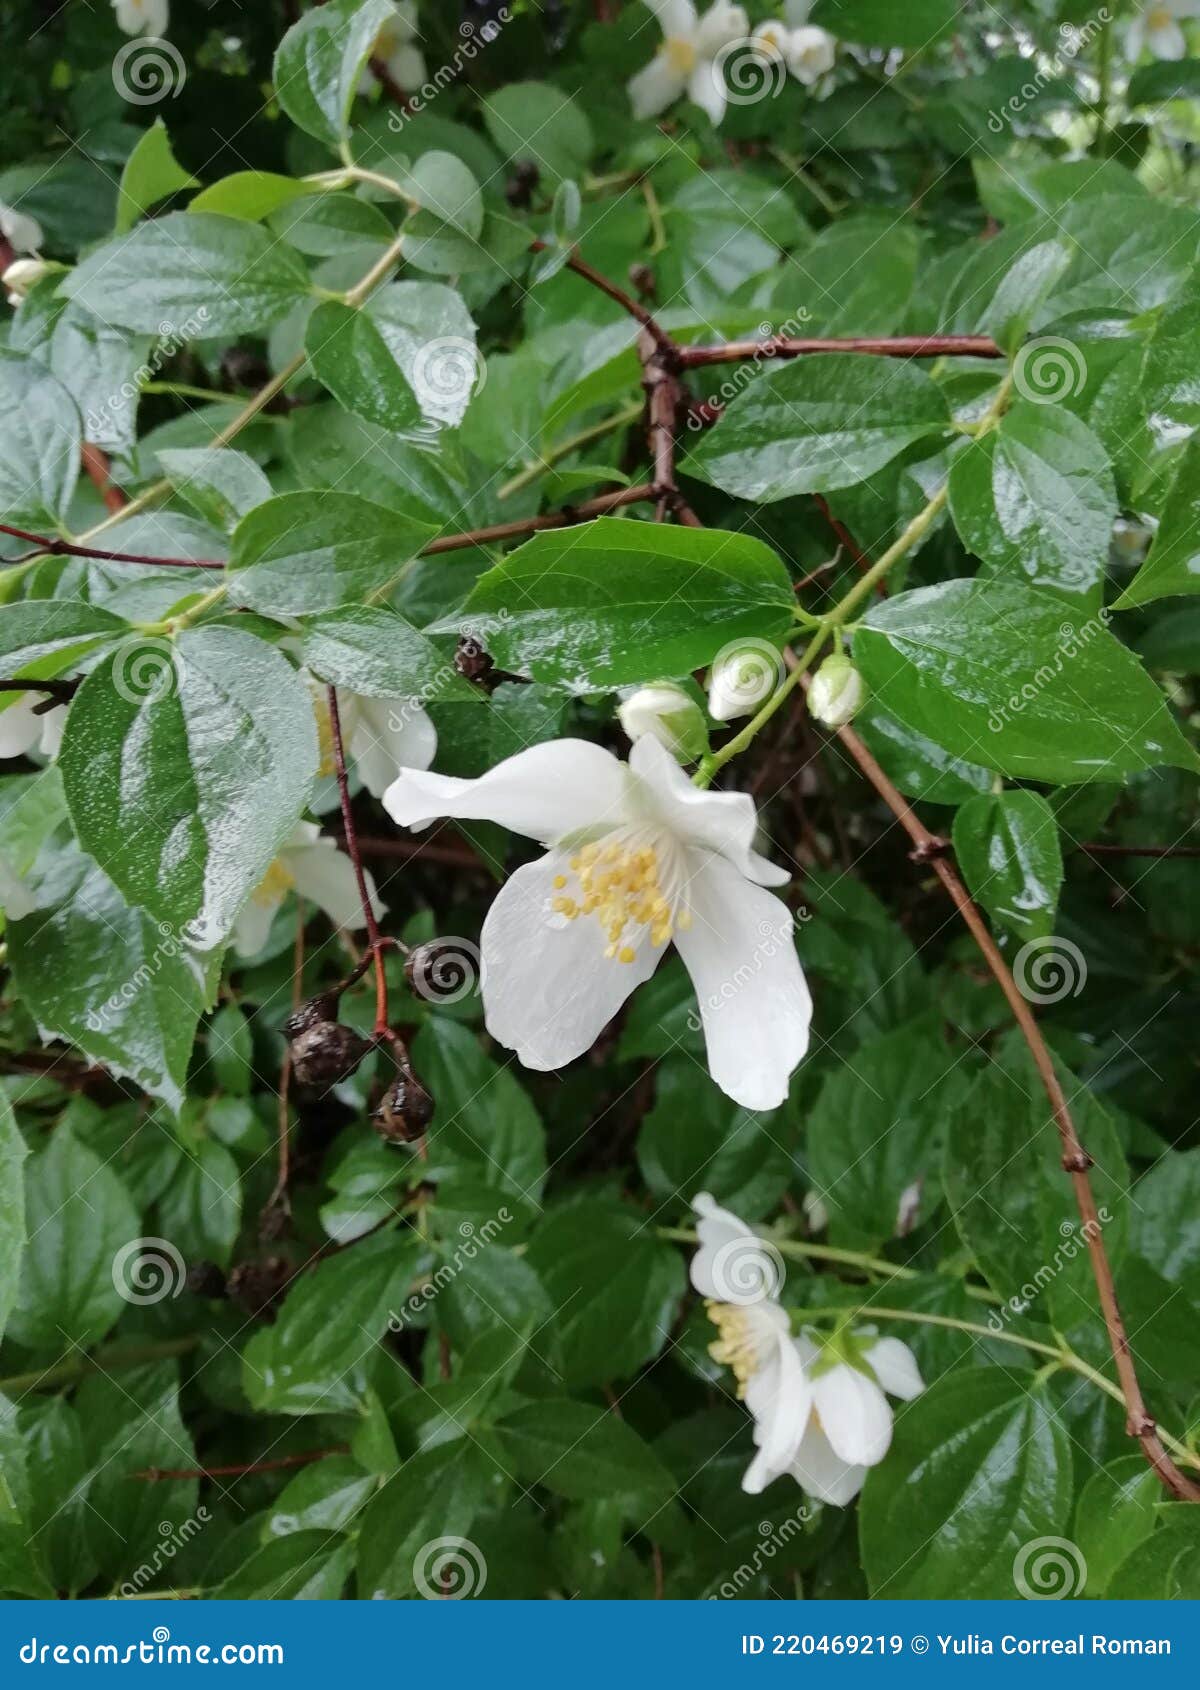 flower of the bush jasmine in the park